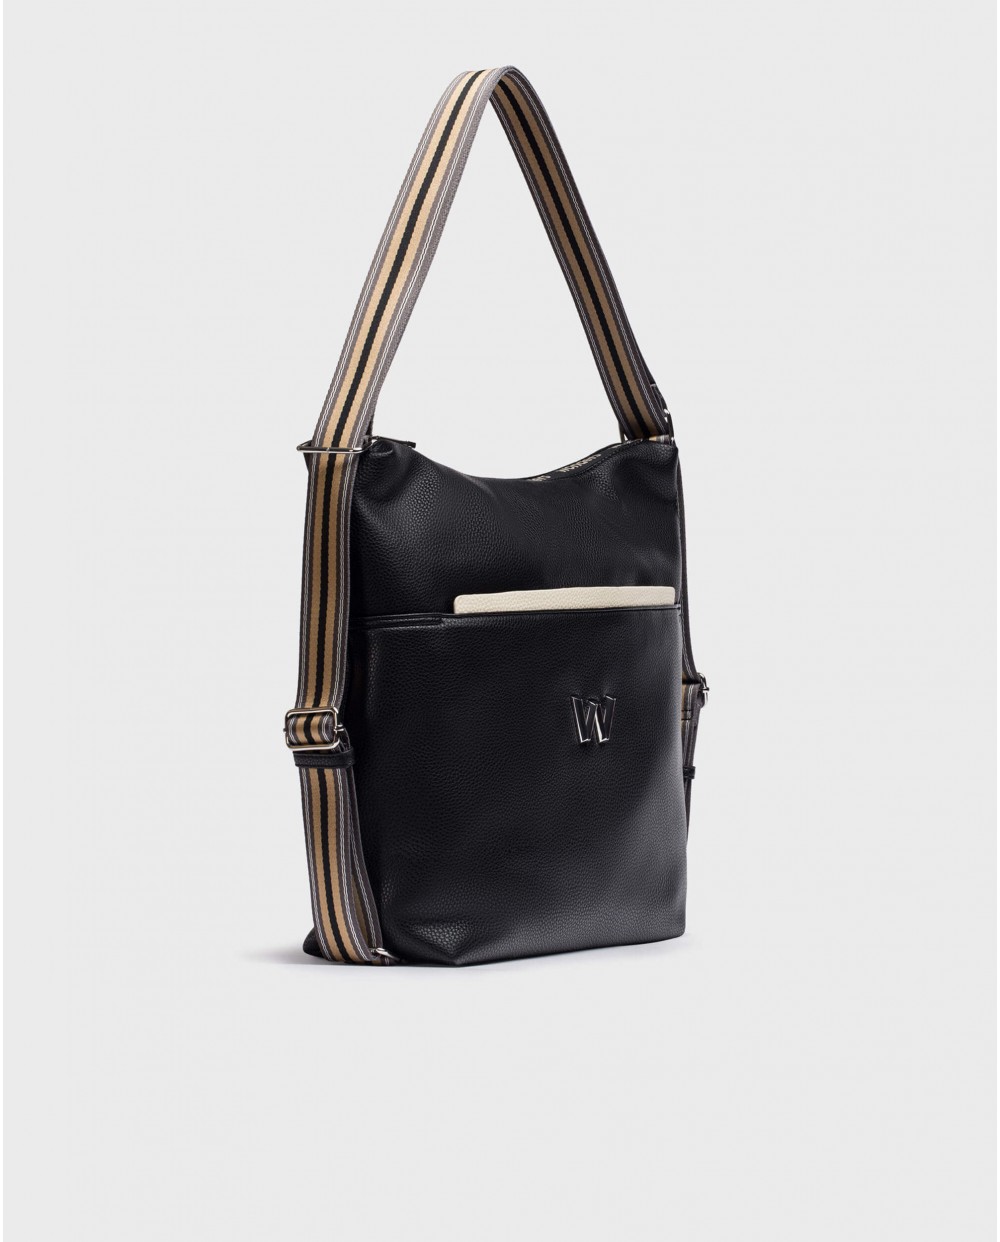 Wonders-Bags-black bicolor AMATISTA bag